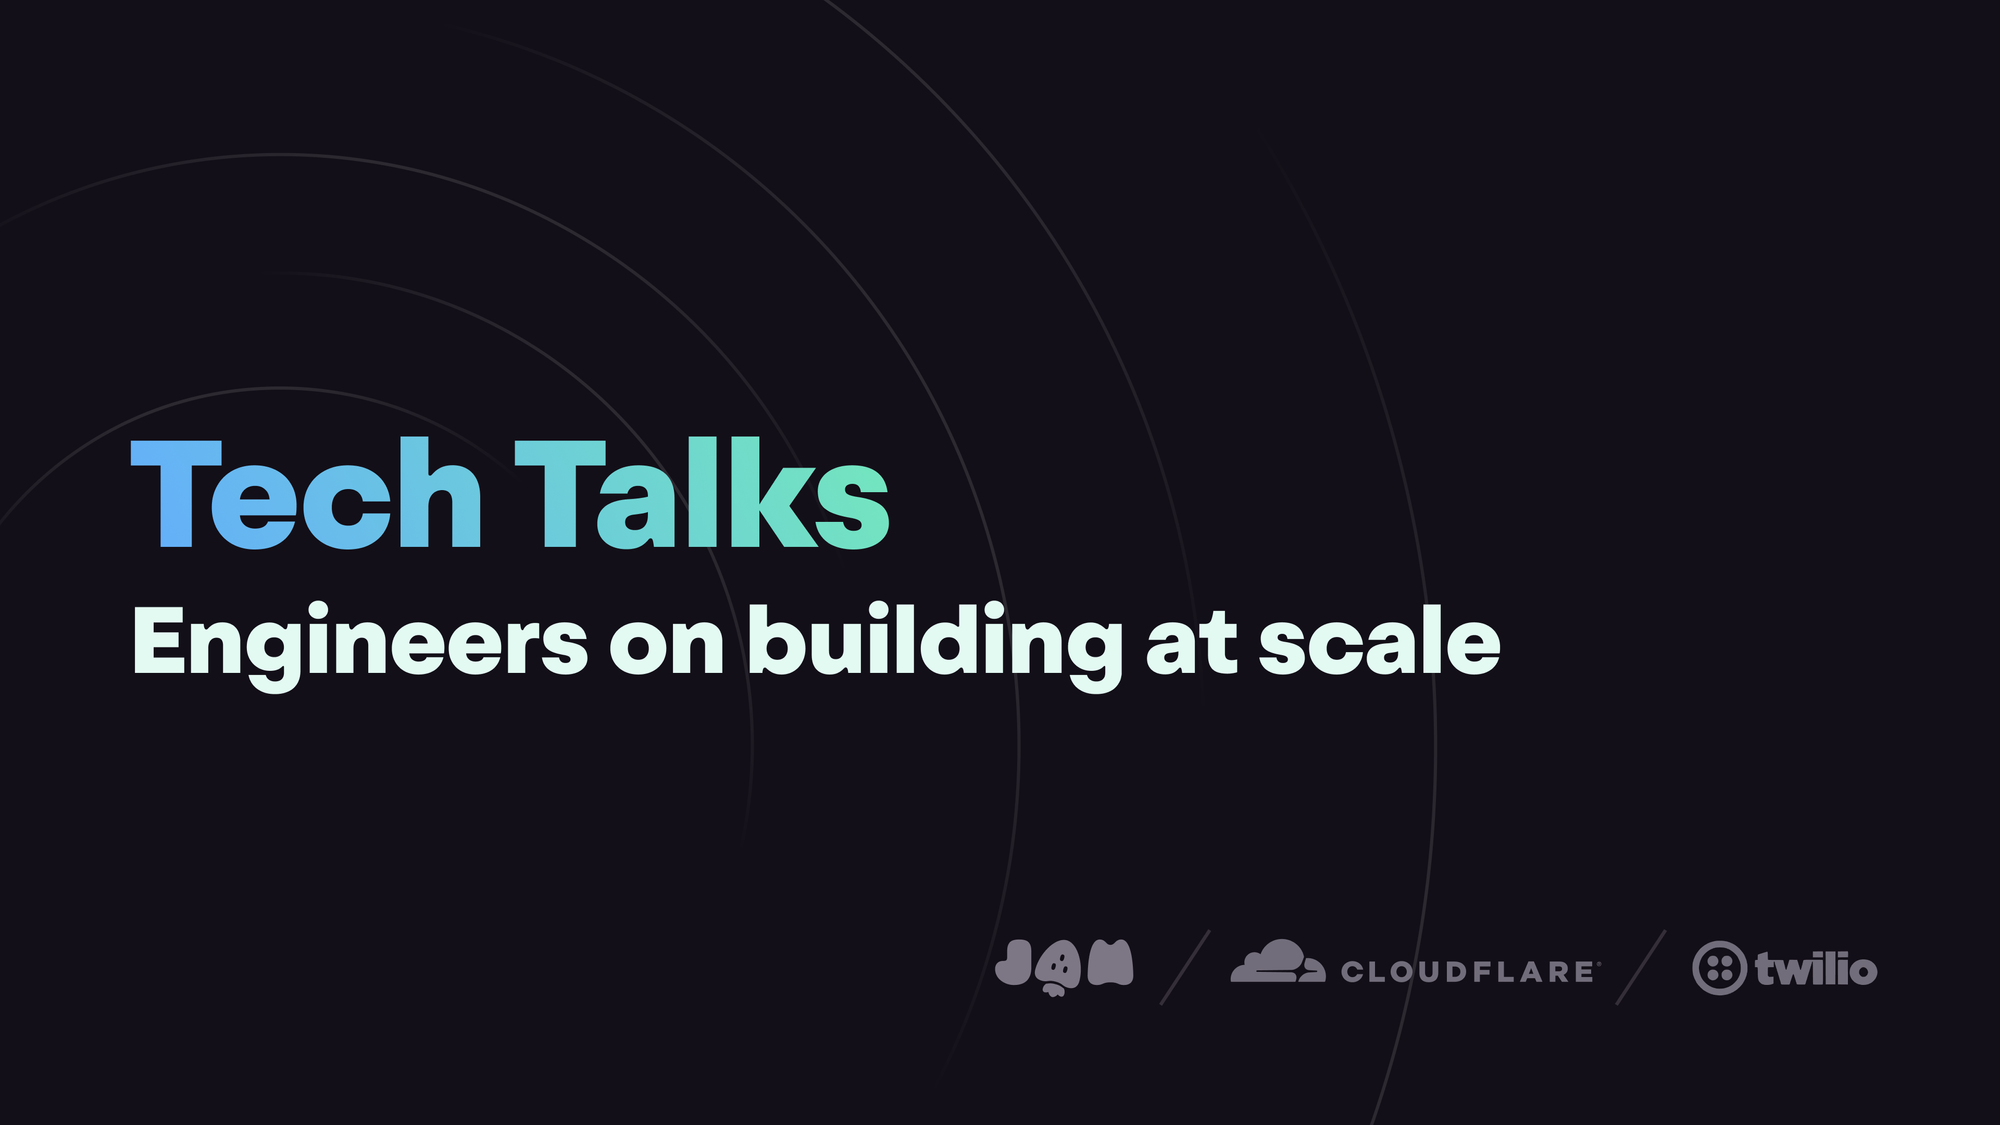 All 5 talks from Cloudflare + Twilio + Jam SF tech talks night